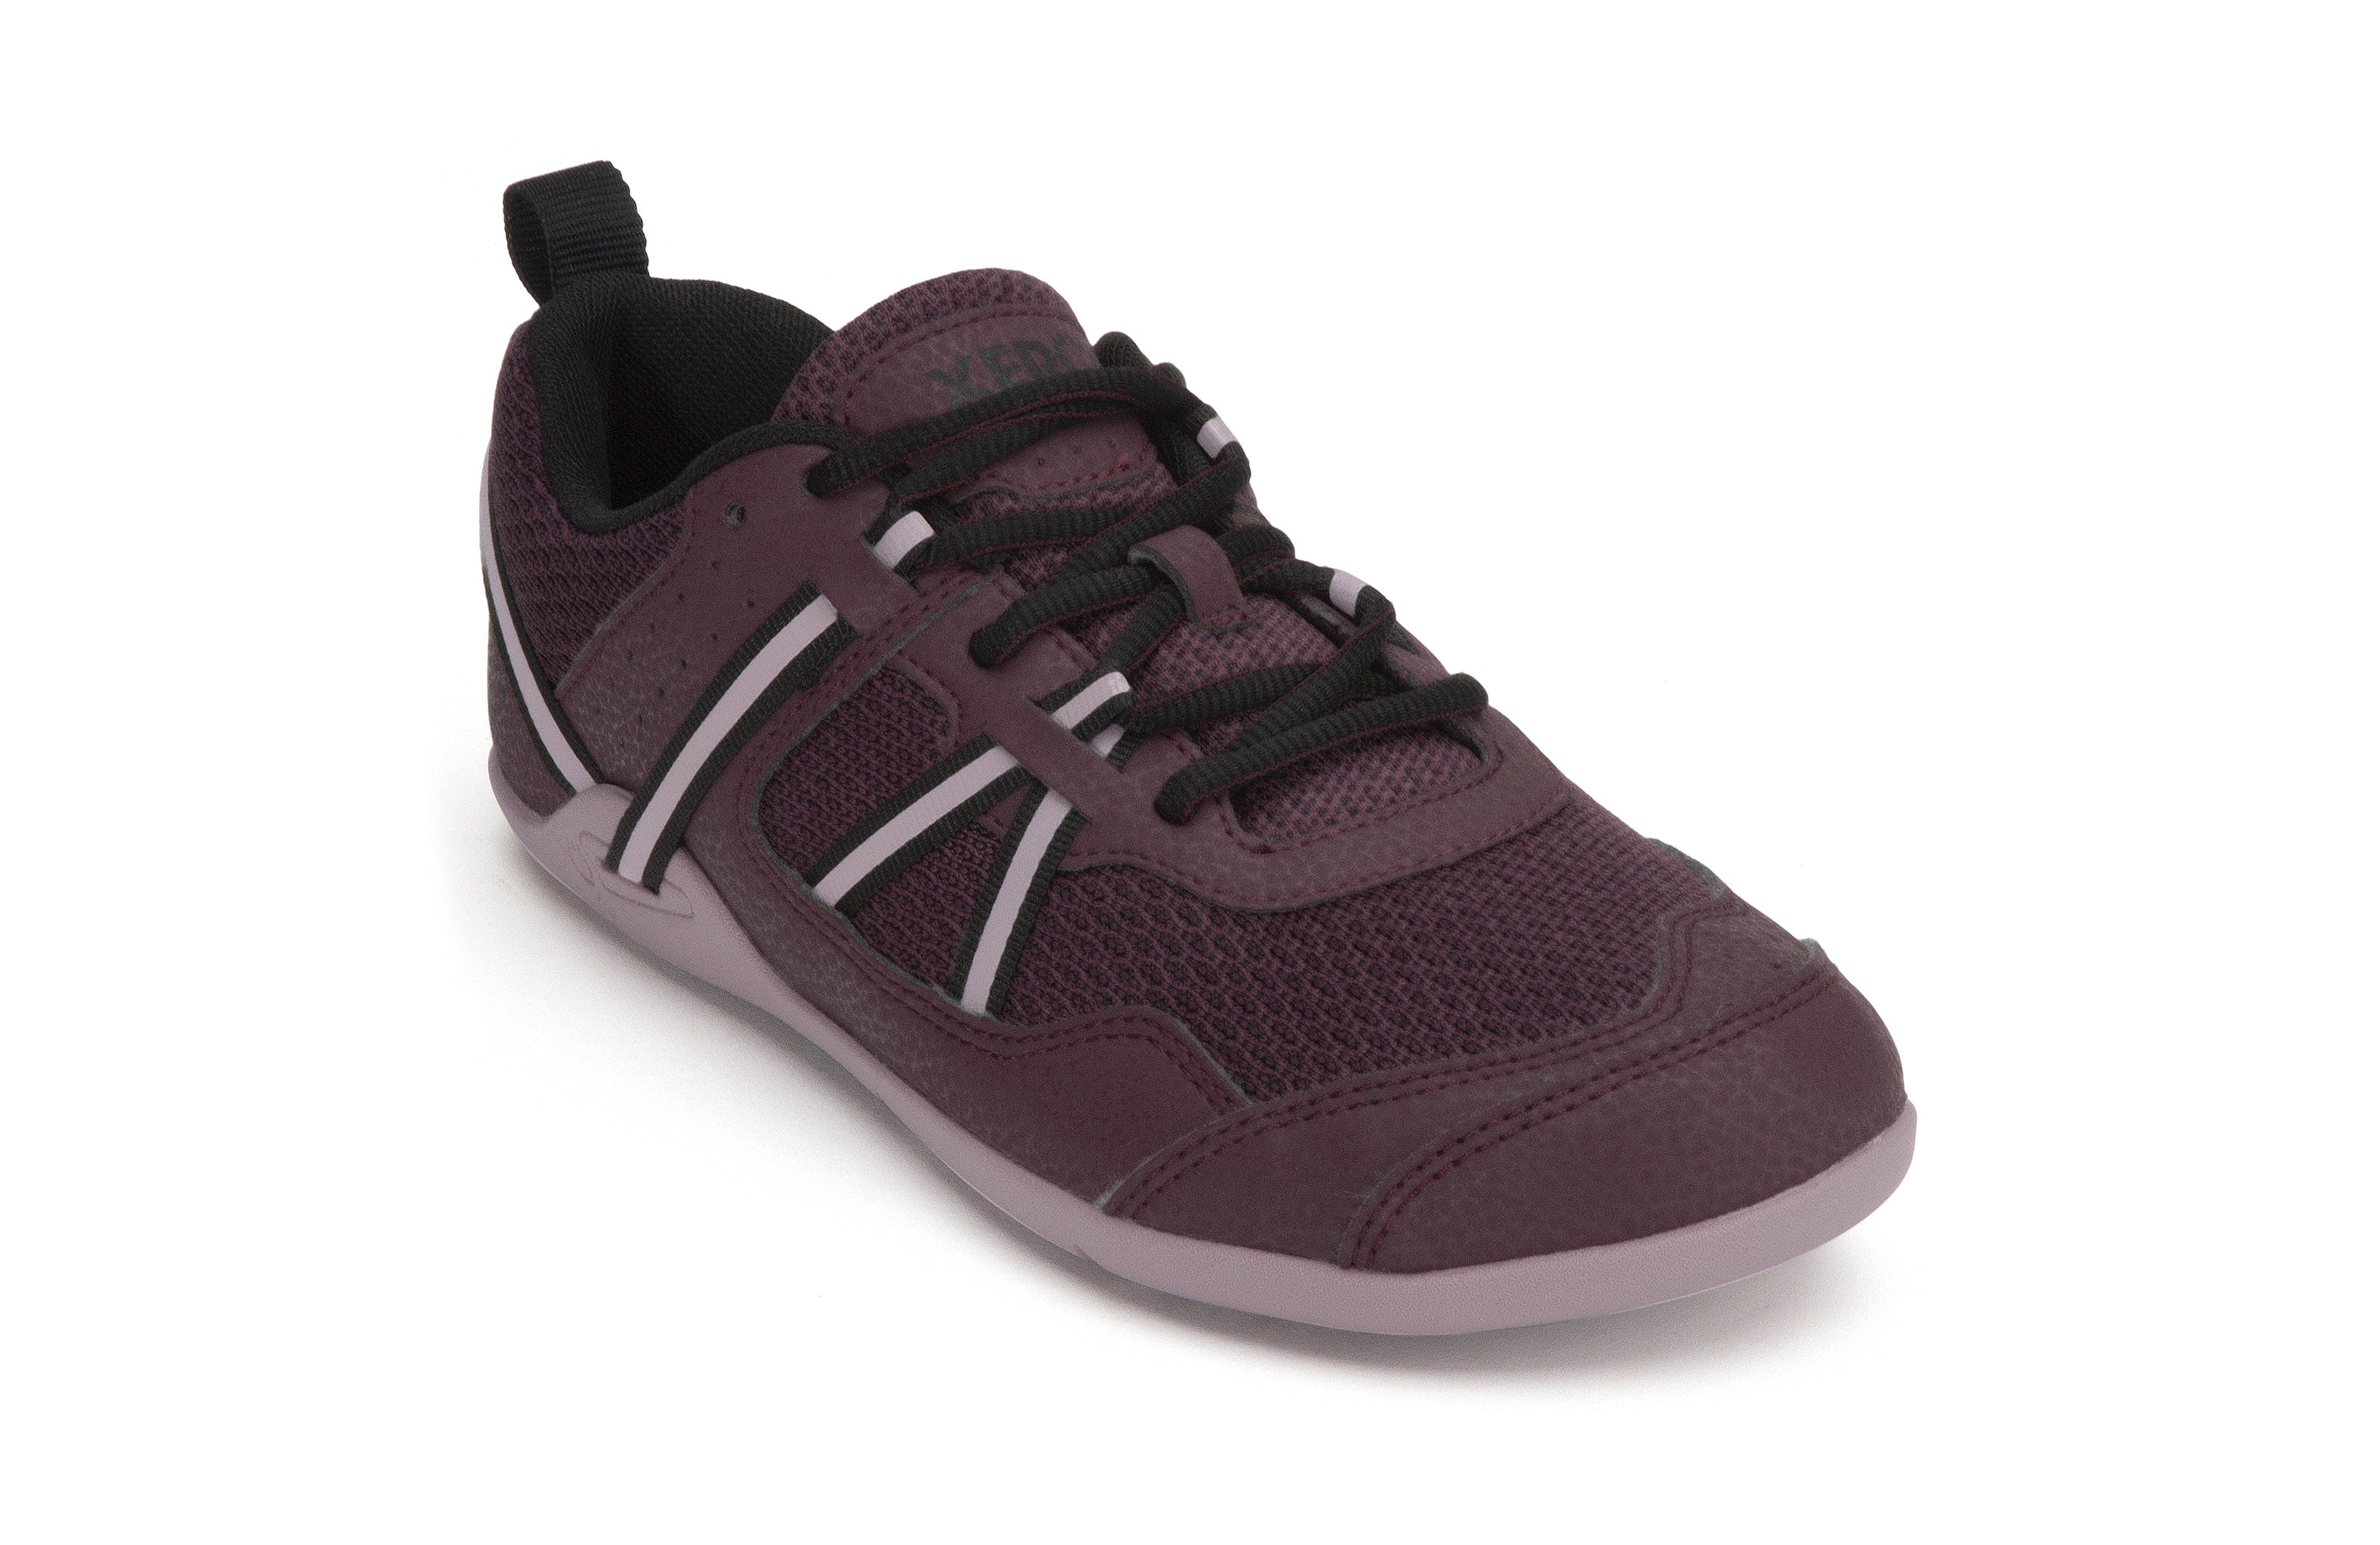 Xero Shoes Prio Womens barfods træningssko til kvinder i farven fig/elderberry, vinklet